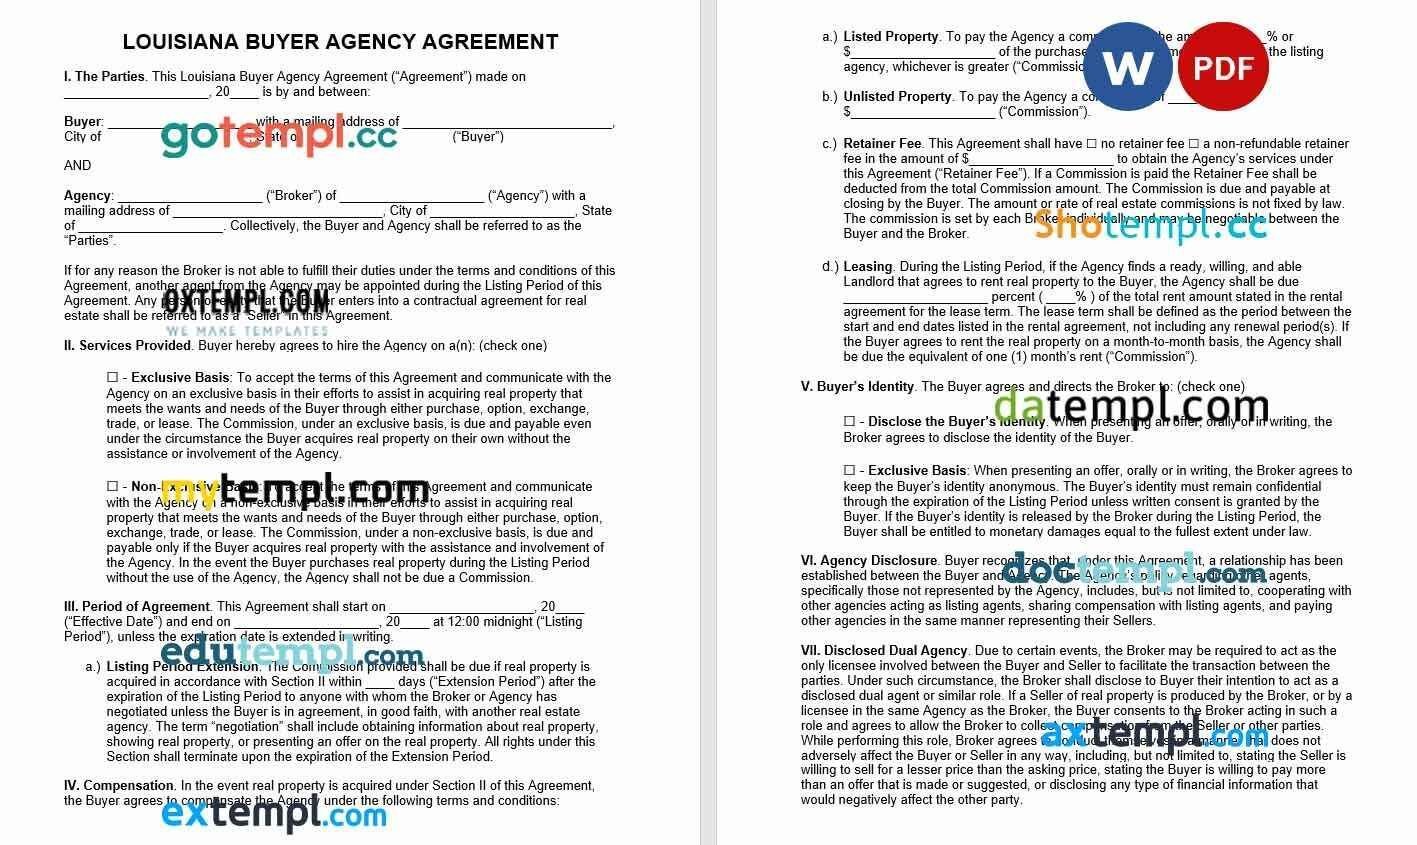 Louisiana Buyer Agency Agreement Word example, fully editable